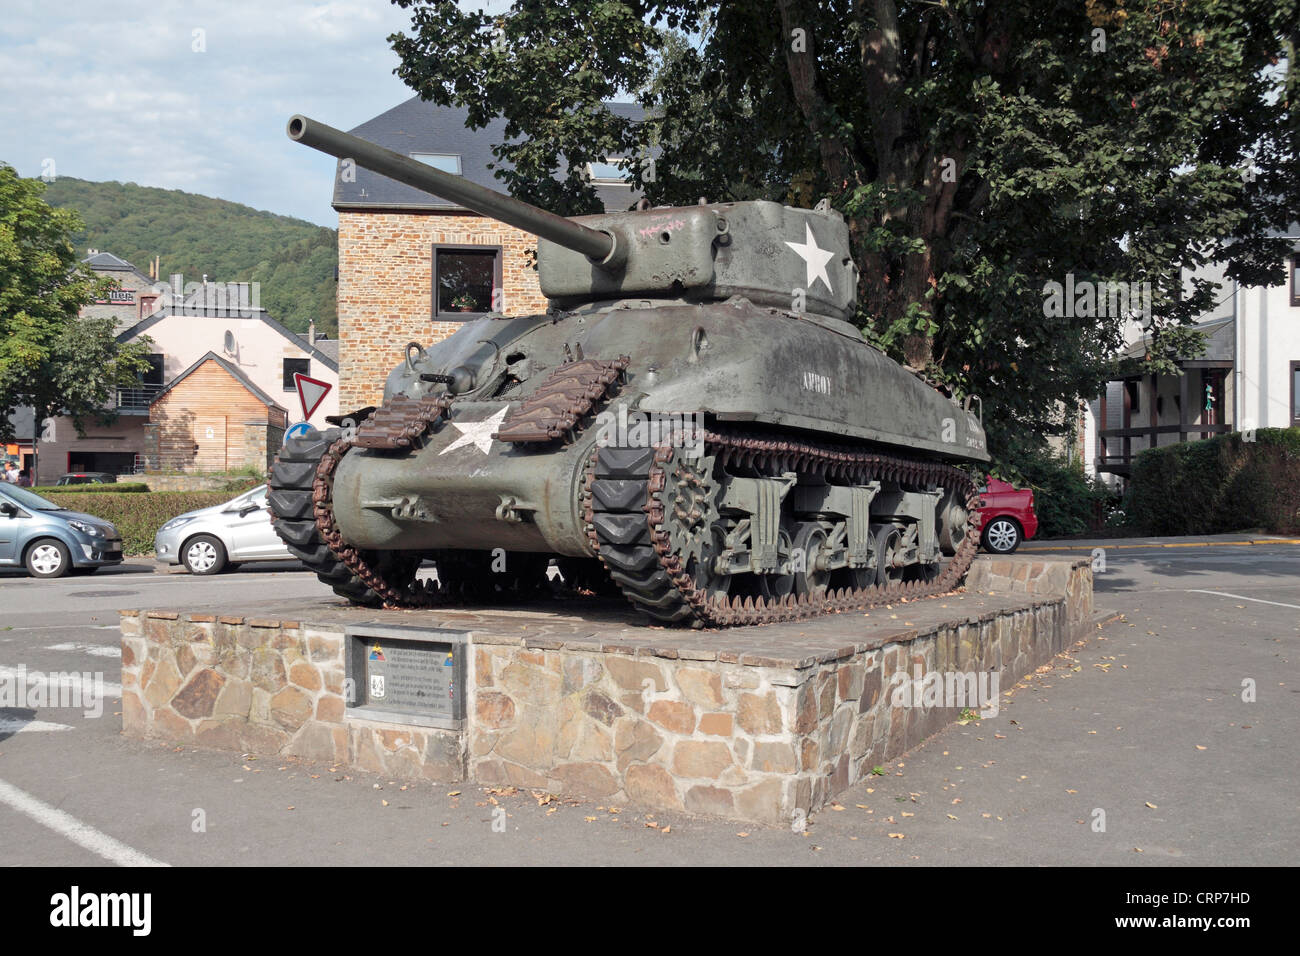 A M4A1 Sherman tank on display in Roche en Ardenne, Wallonia, Belgium. Stock Photo